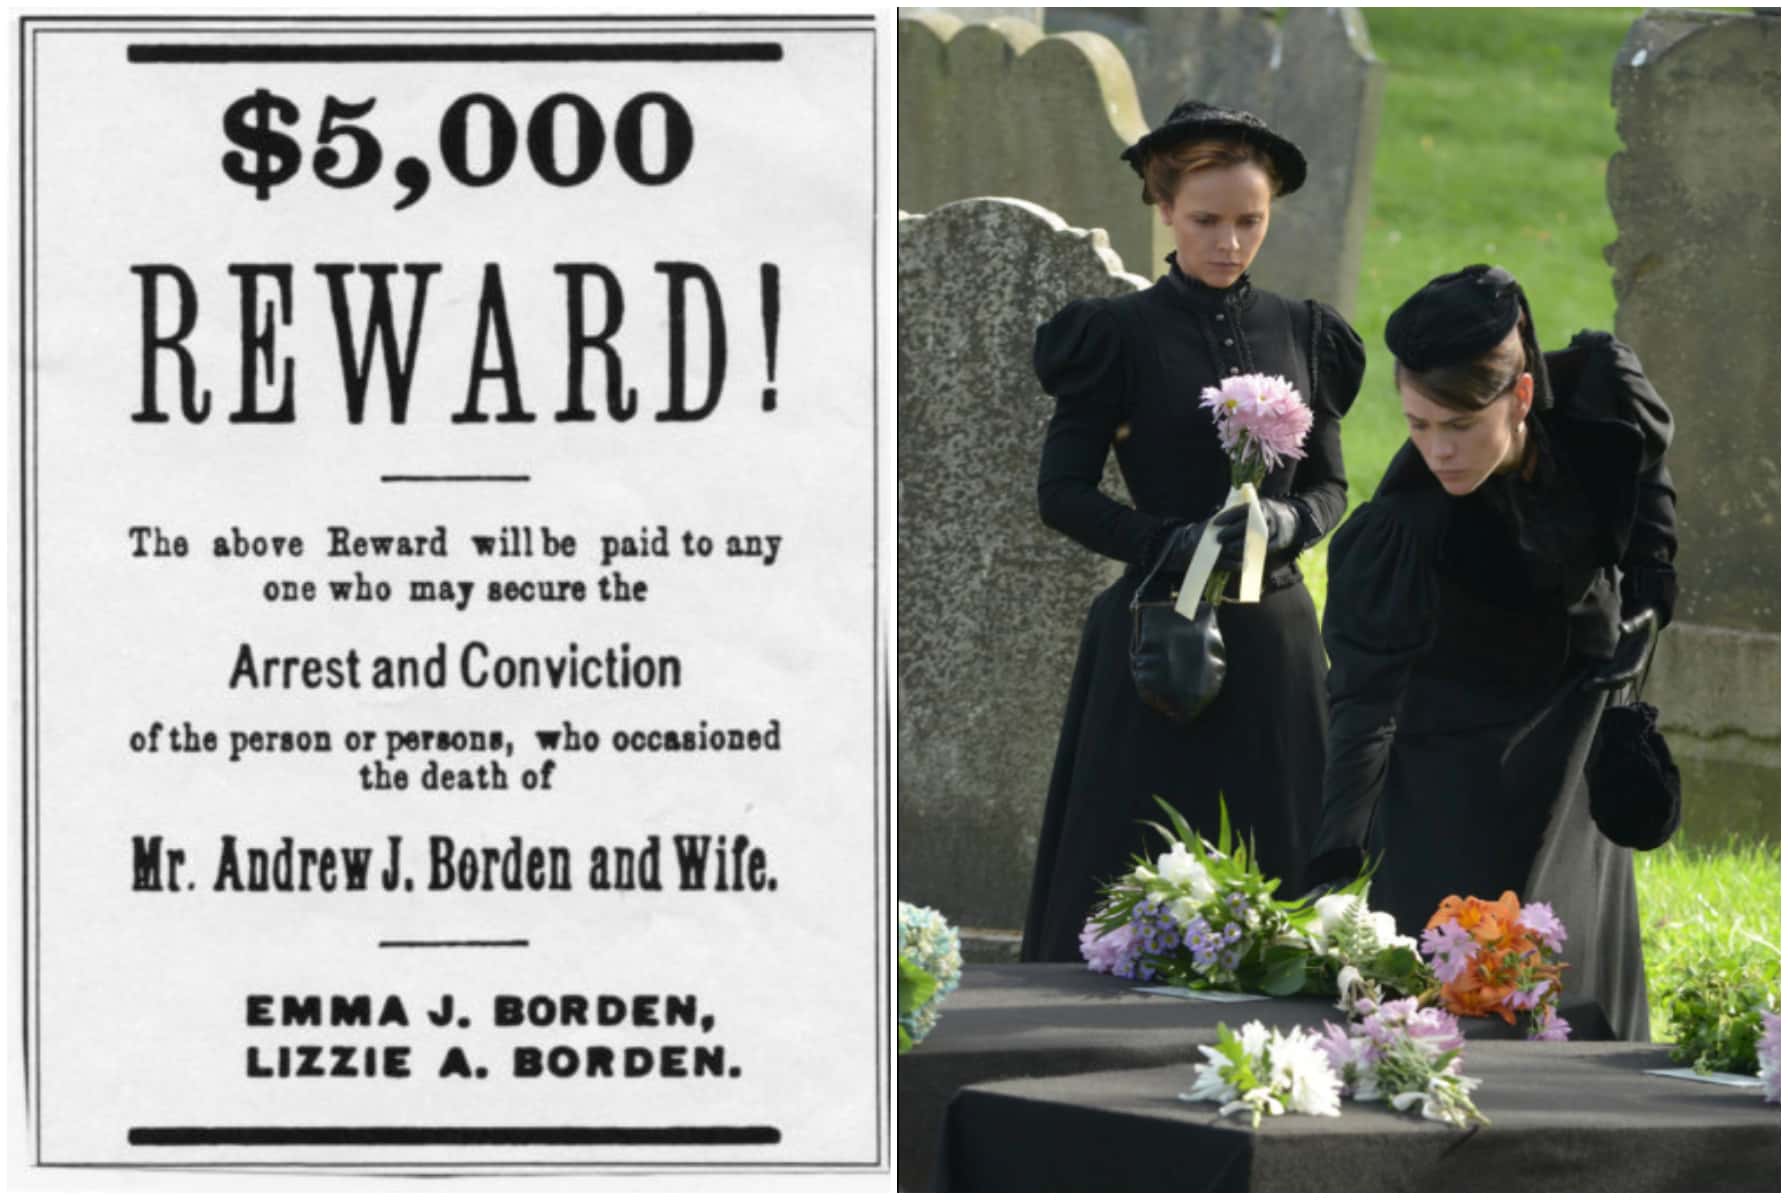 Lizzie Borden facts